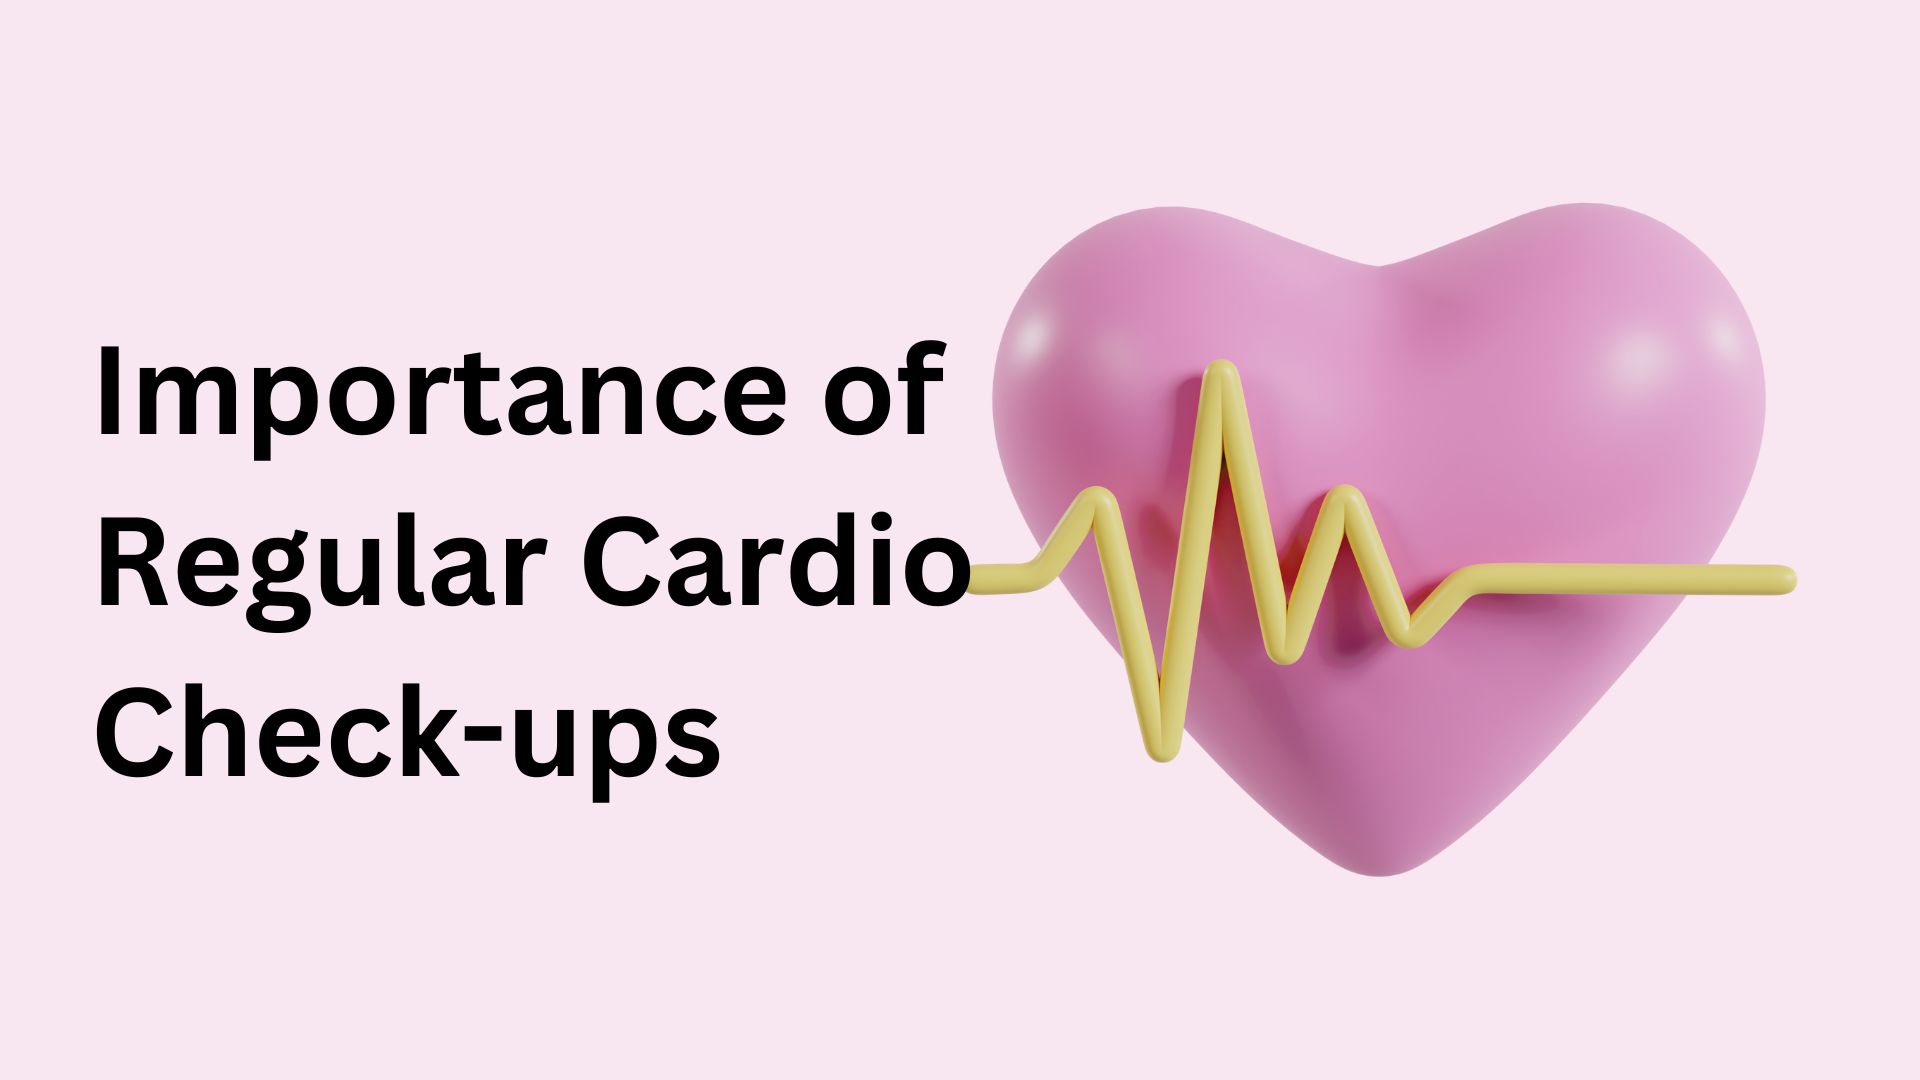 Importance of Regular Cardio Check-ups